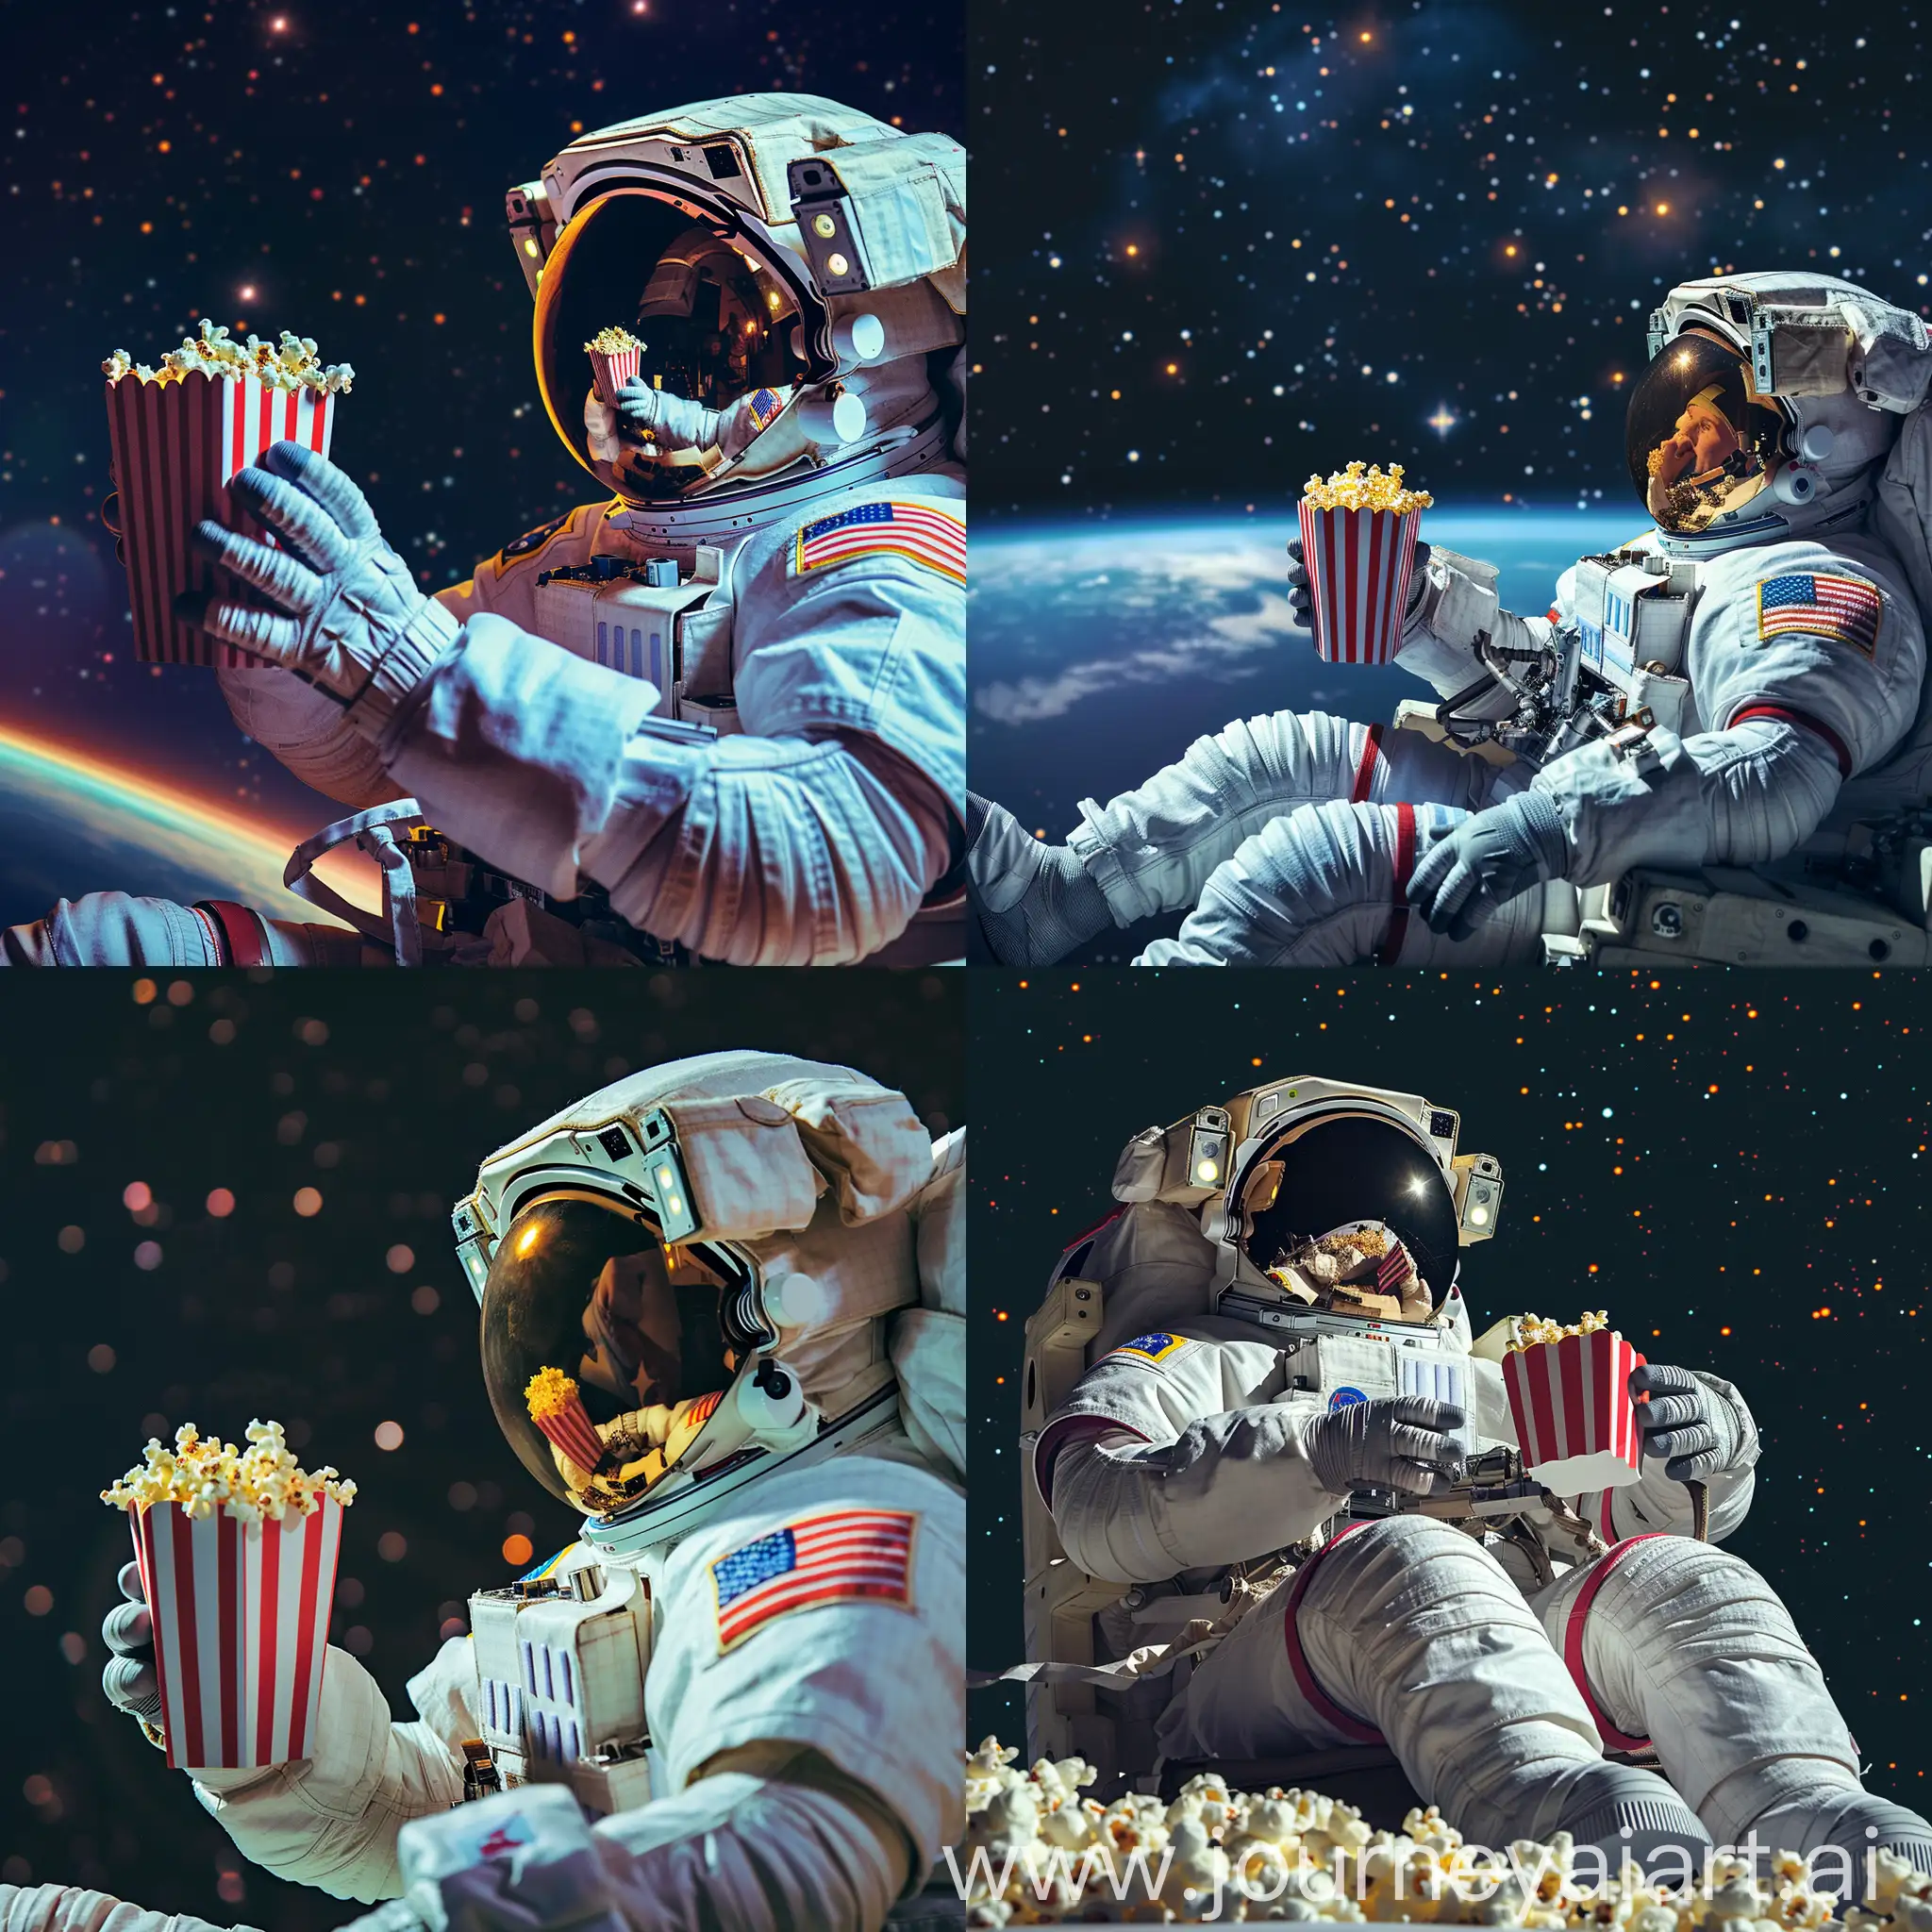 Astronaut-Enjoying-Movie-Night-in-Space-with-Popcorn